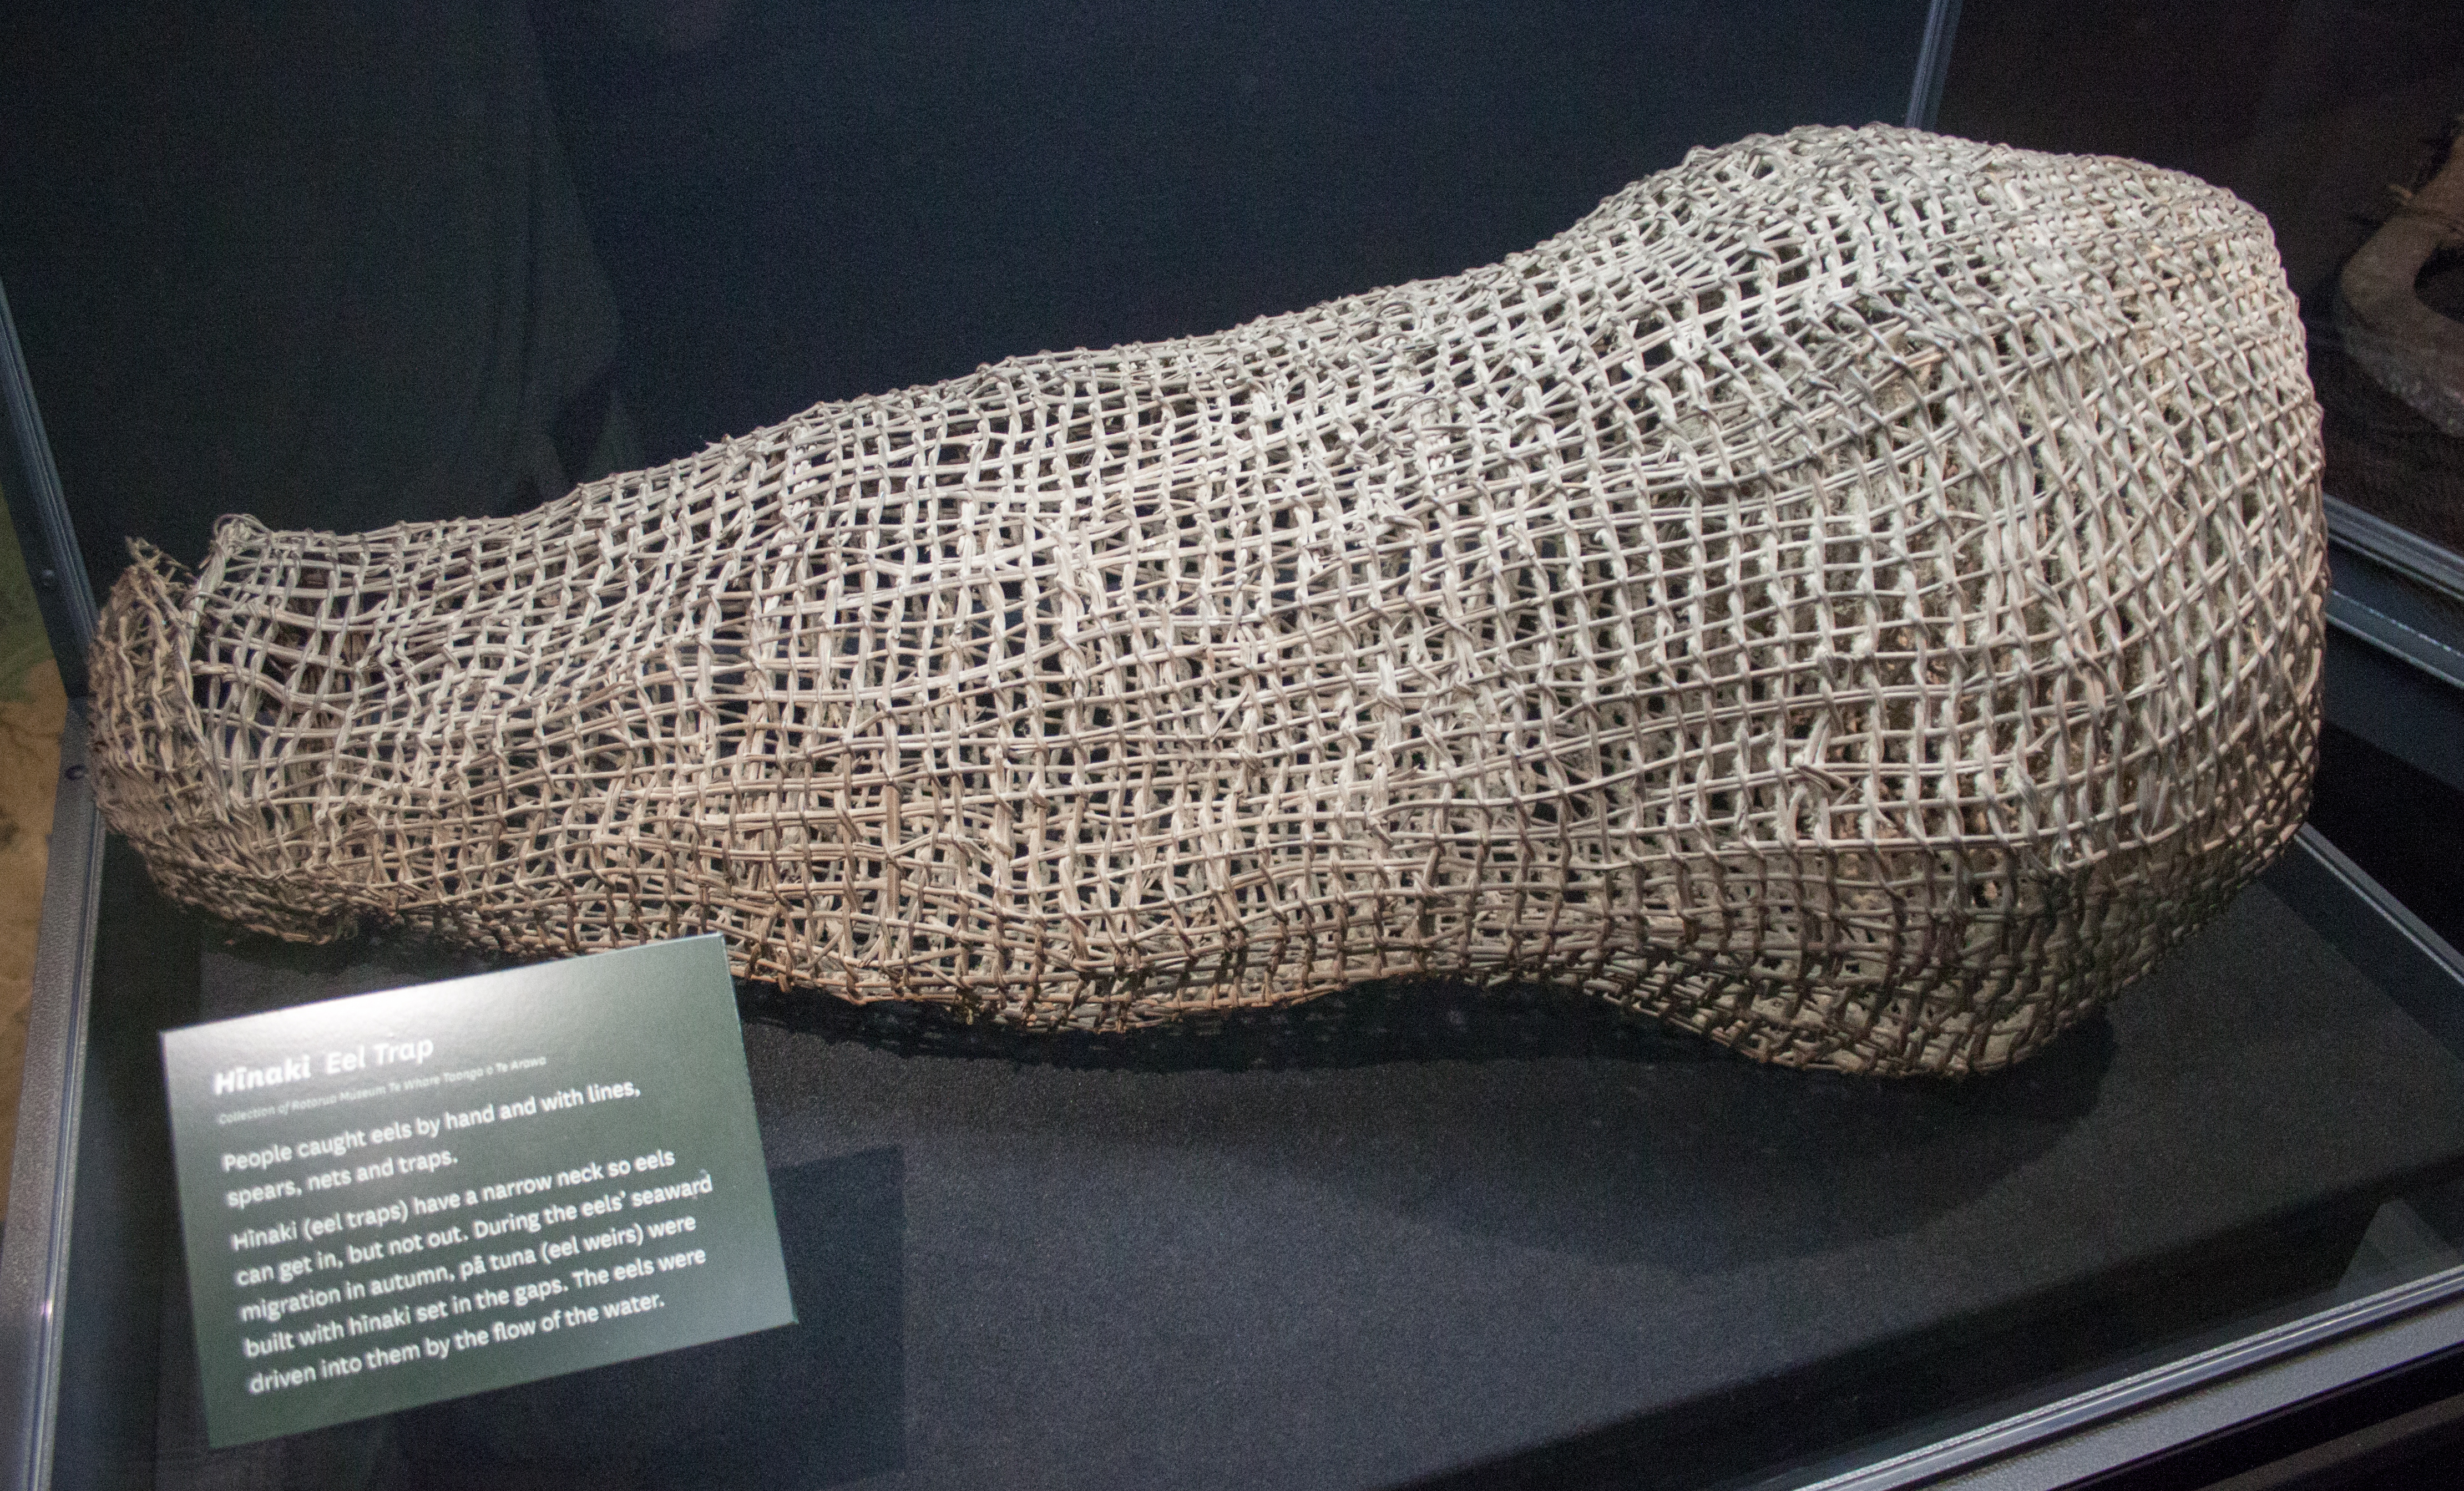 File:Eel trap in the Rotorua Museum.jpg - Wikimedia Commons